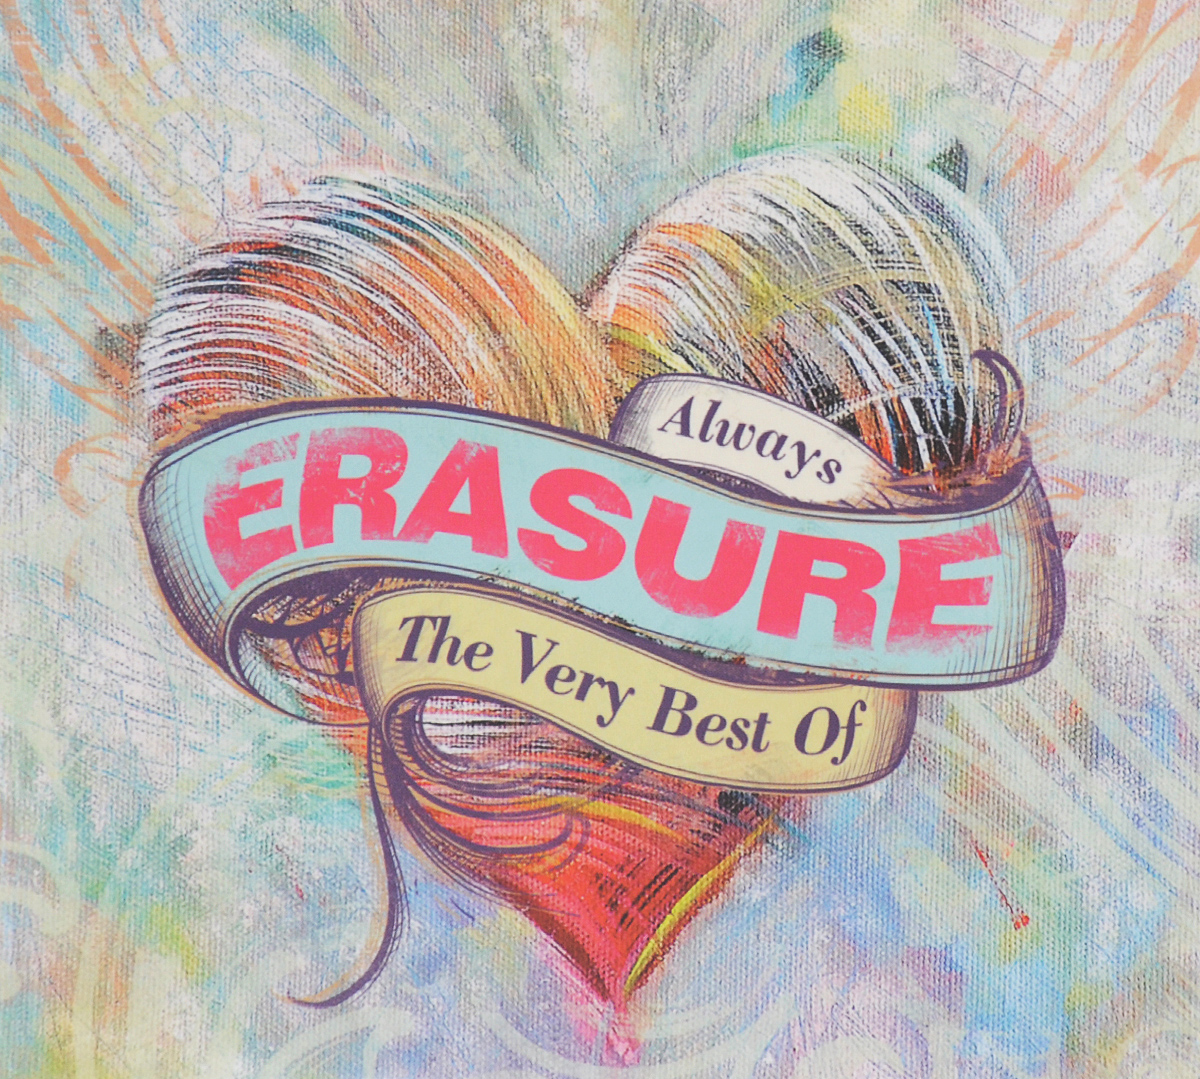 Erasure. Always The Very Best Erasure